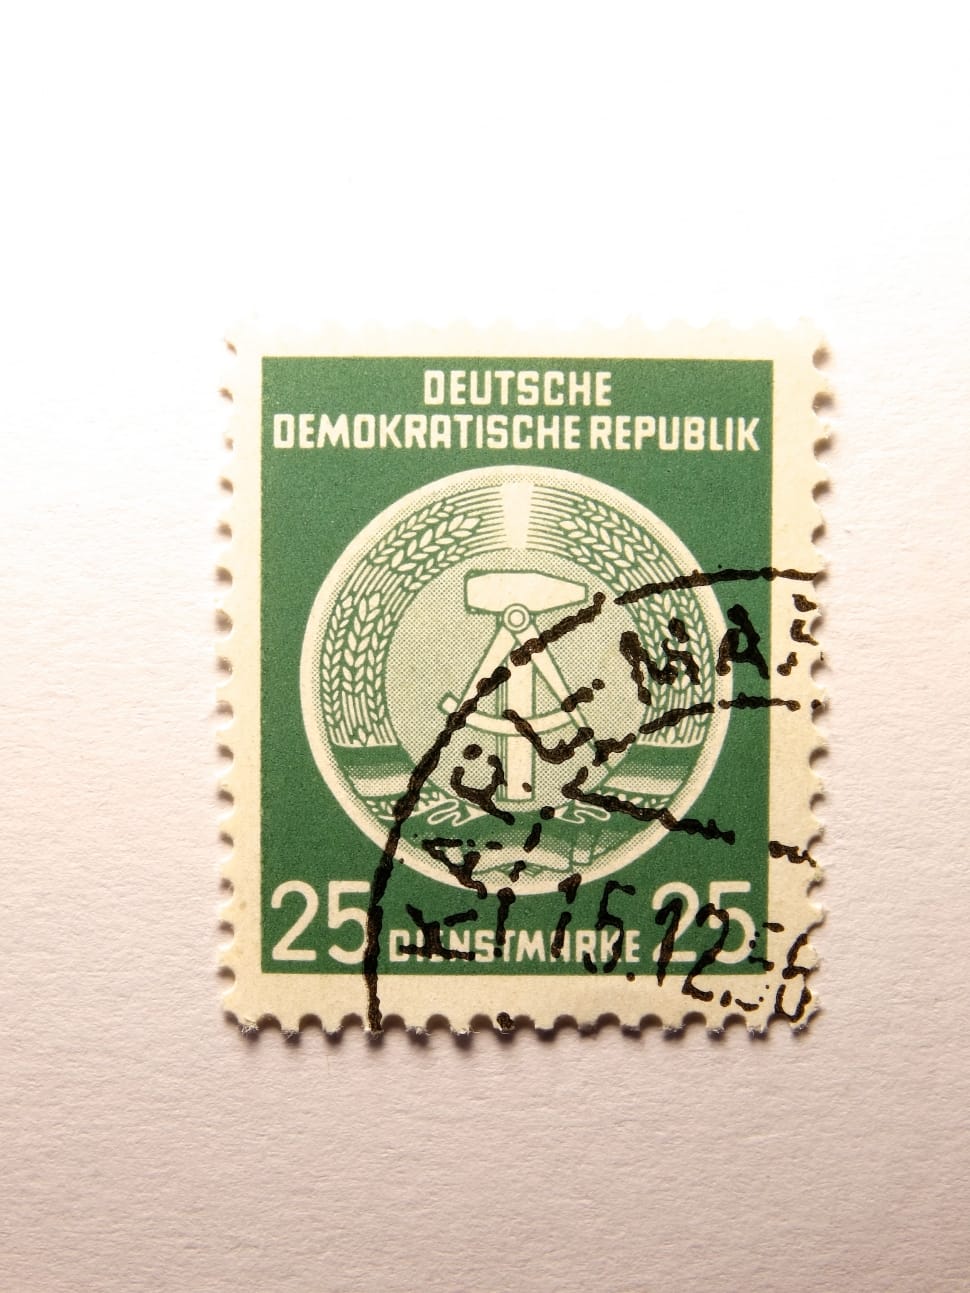 deutsche demokratische republik 25 postage stamp preview